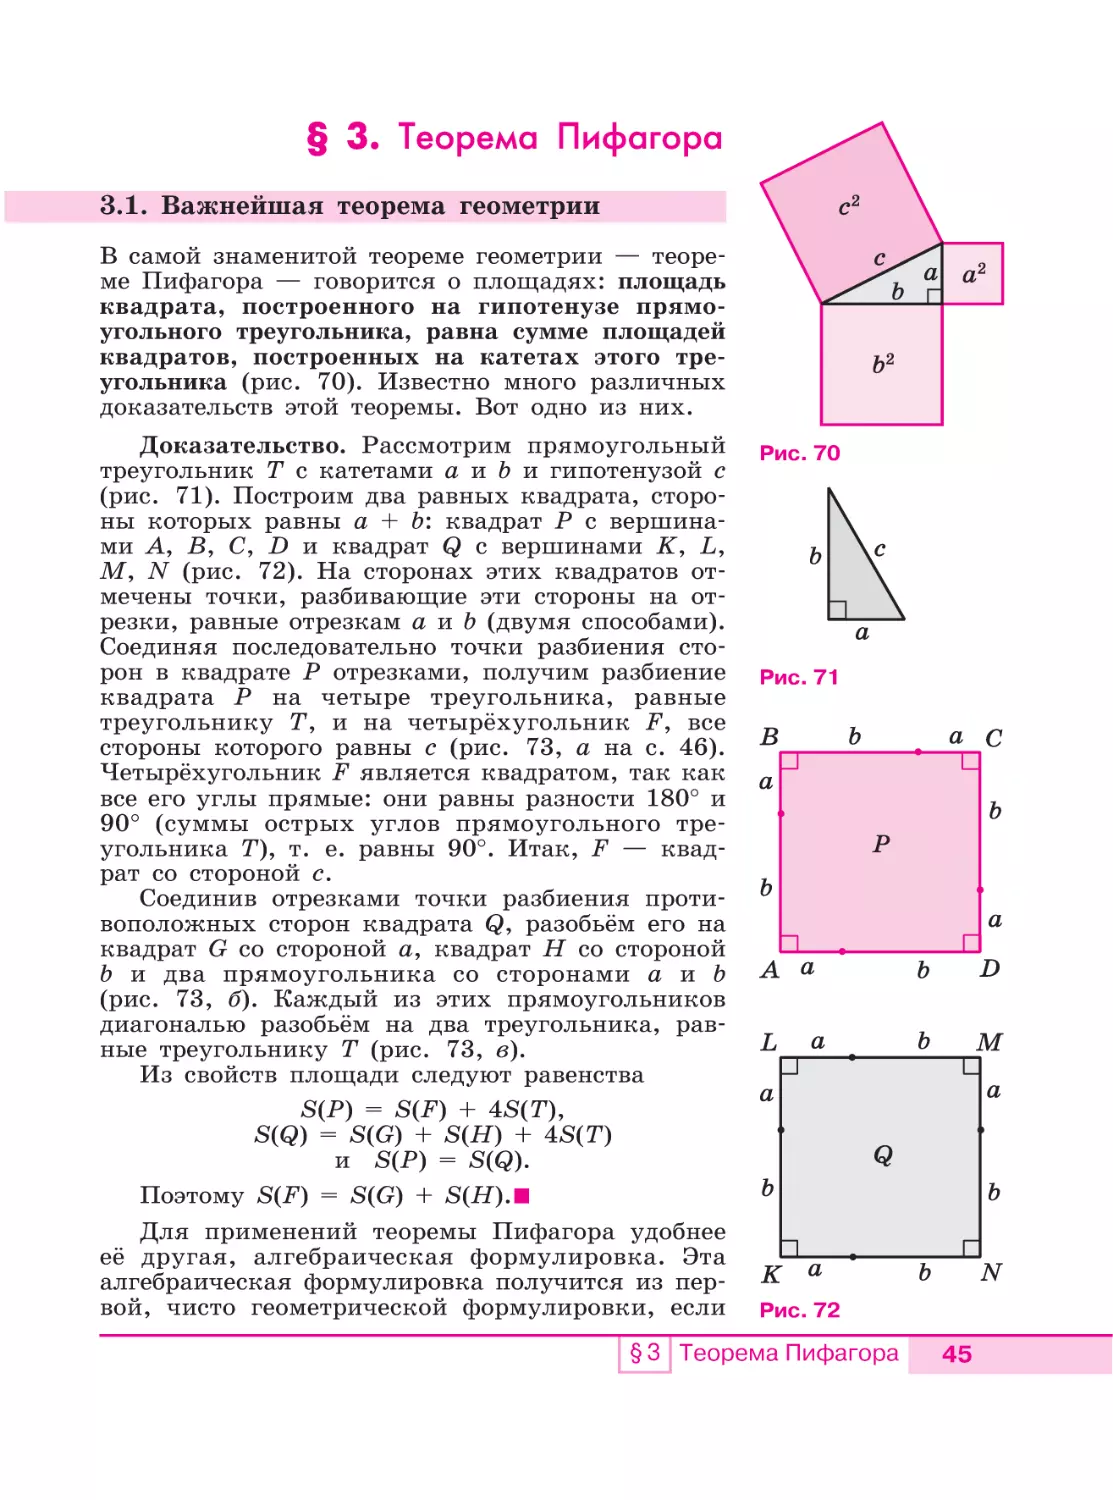 §3. Теорема Пифагора
3. 1. Важнейшая теорема геометрии